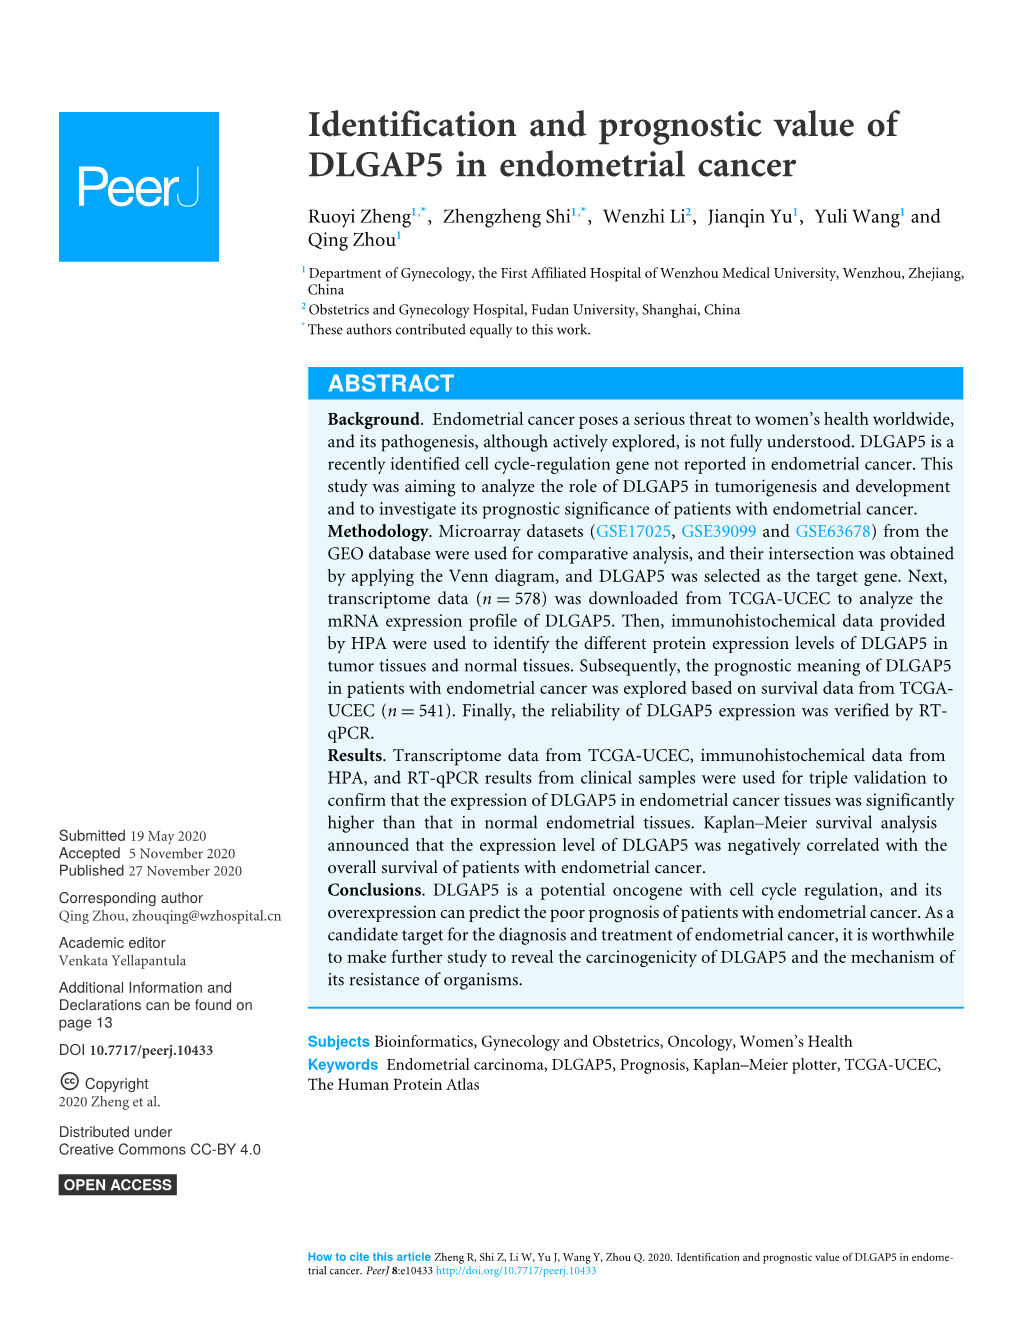 Identification and Prognostic Value of DLGAP5 in Endometrial Cancer